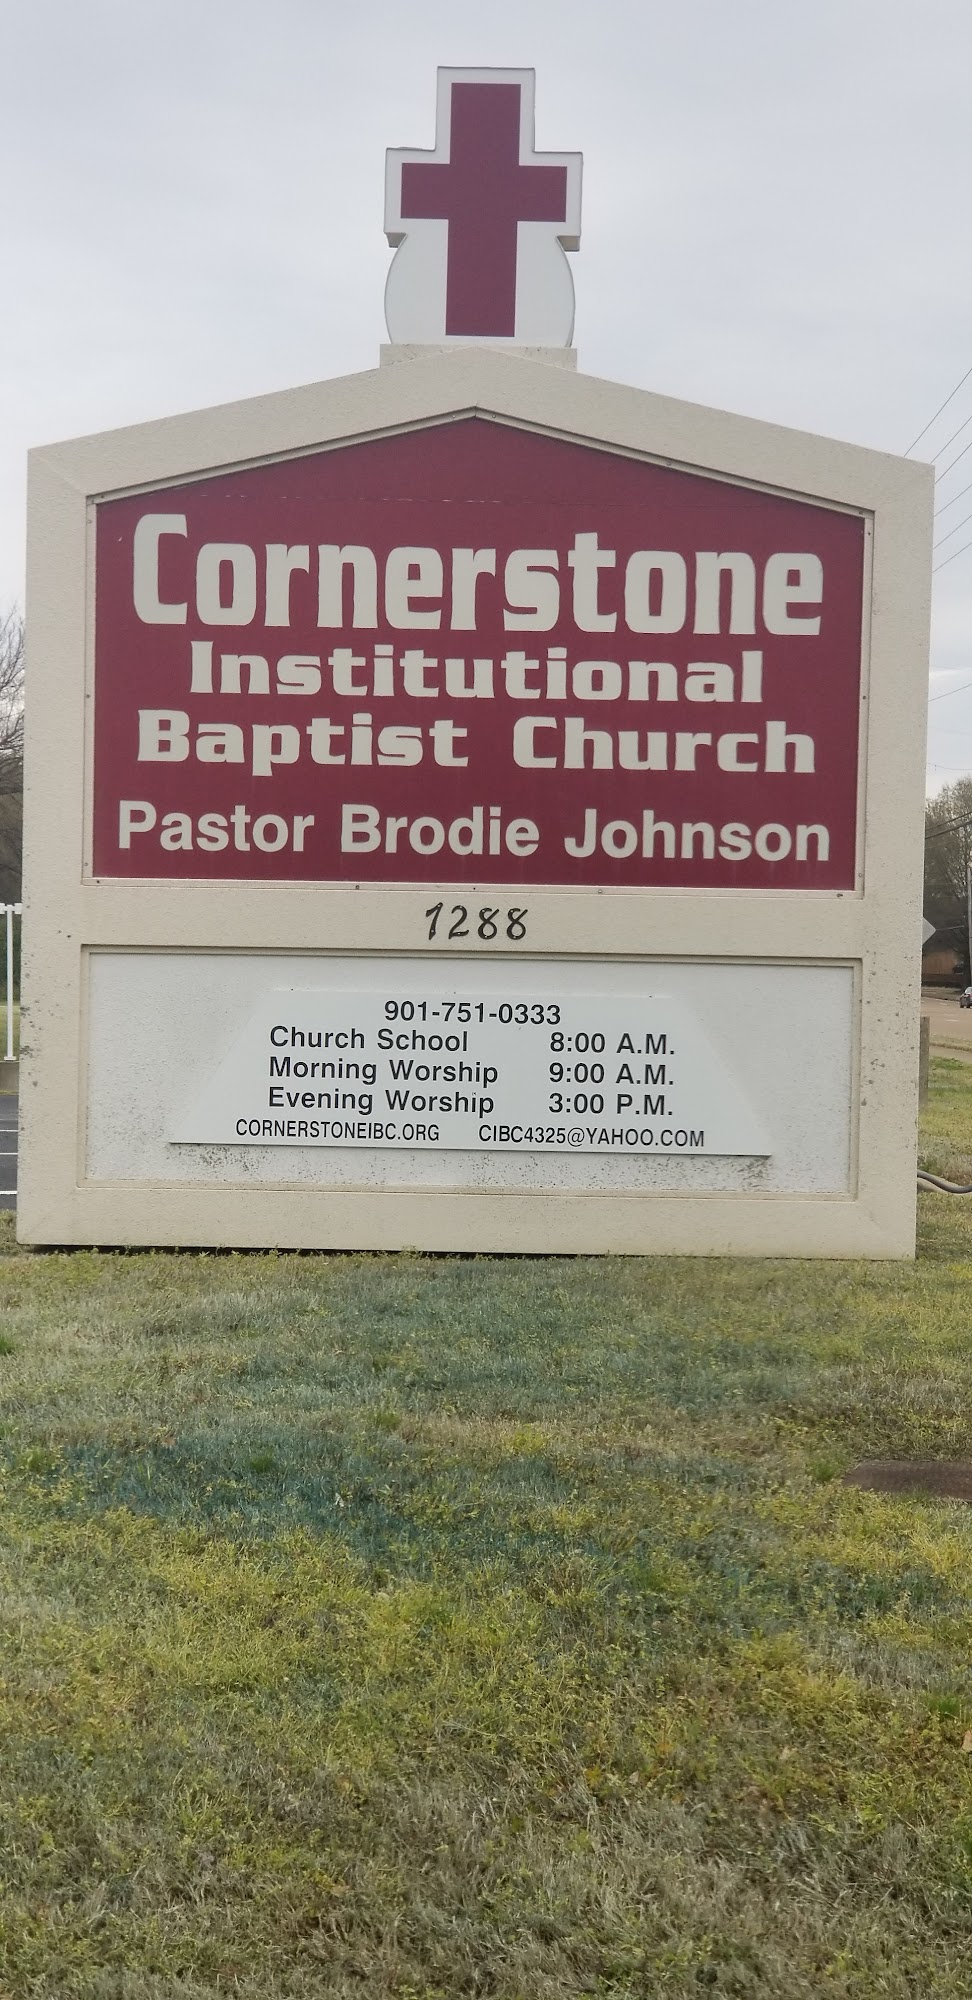 Cornerstone Institutional Baptist Church